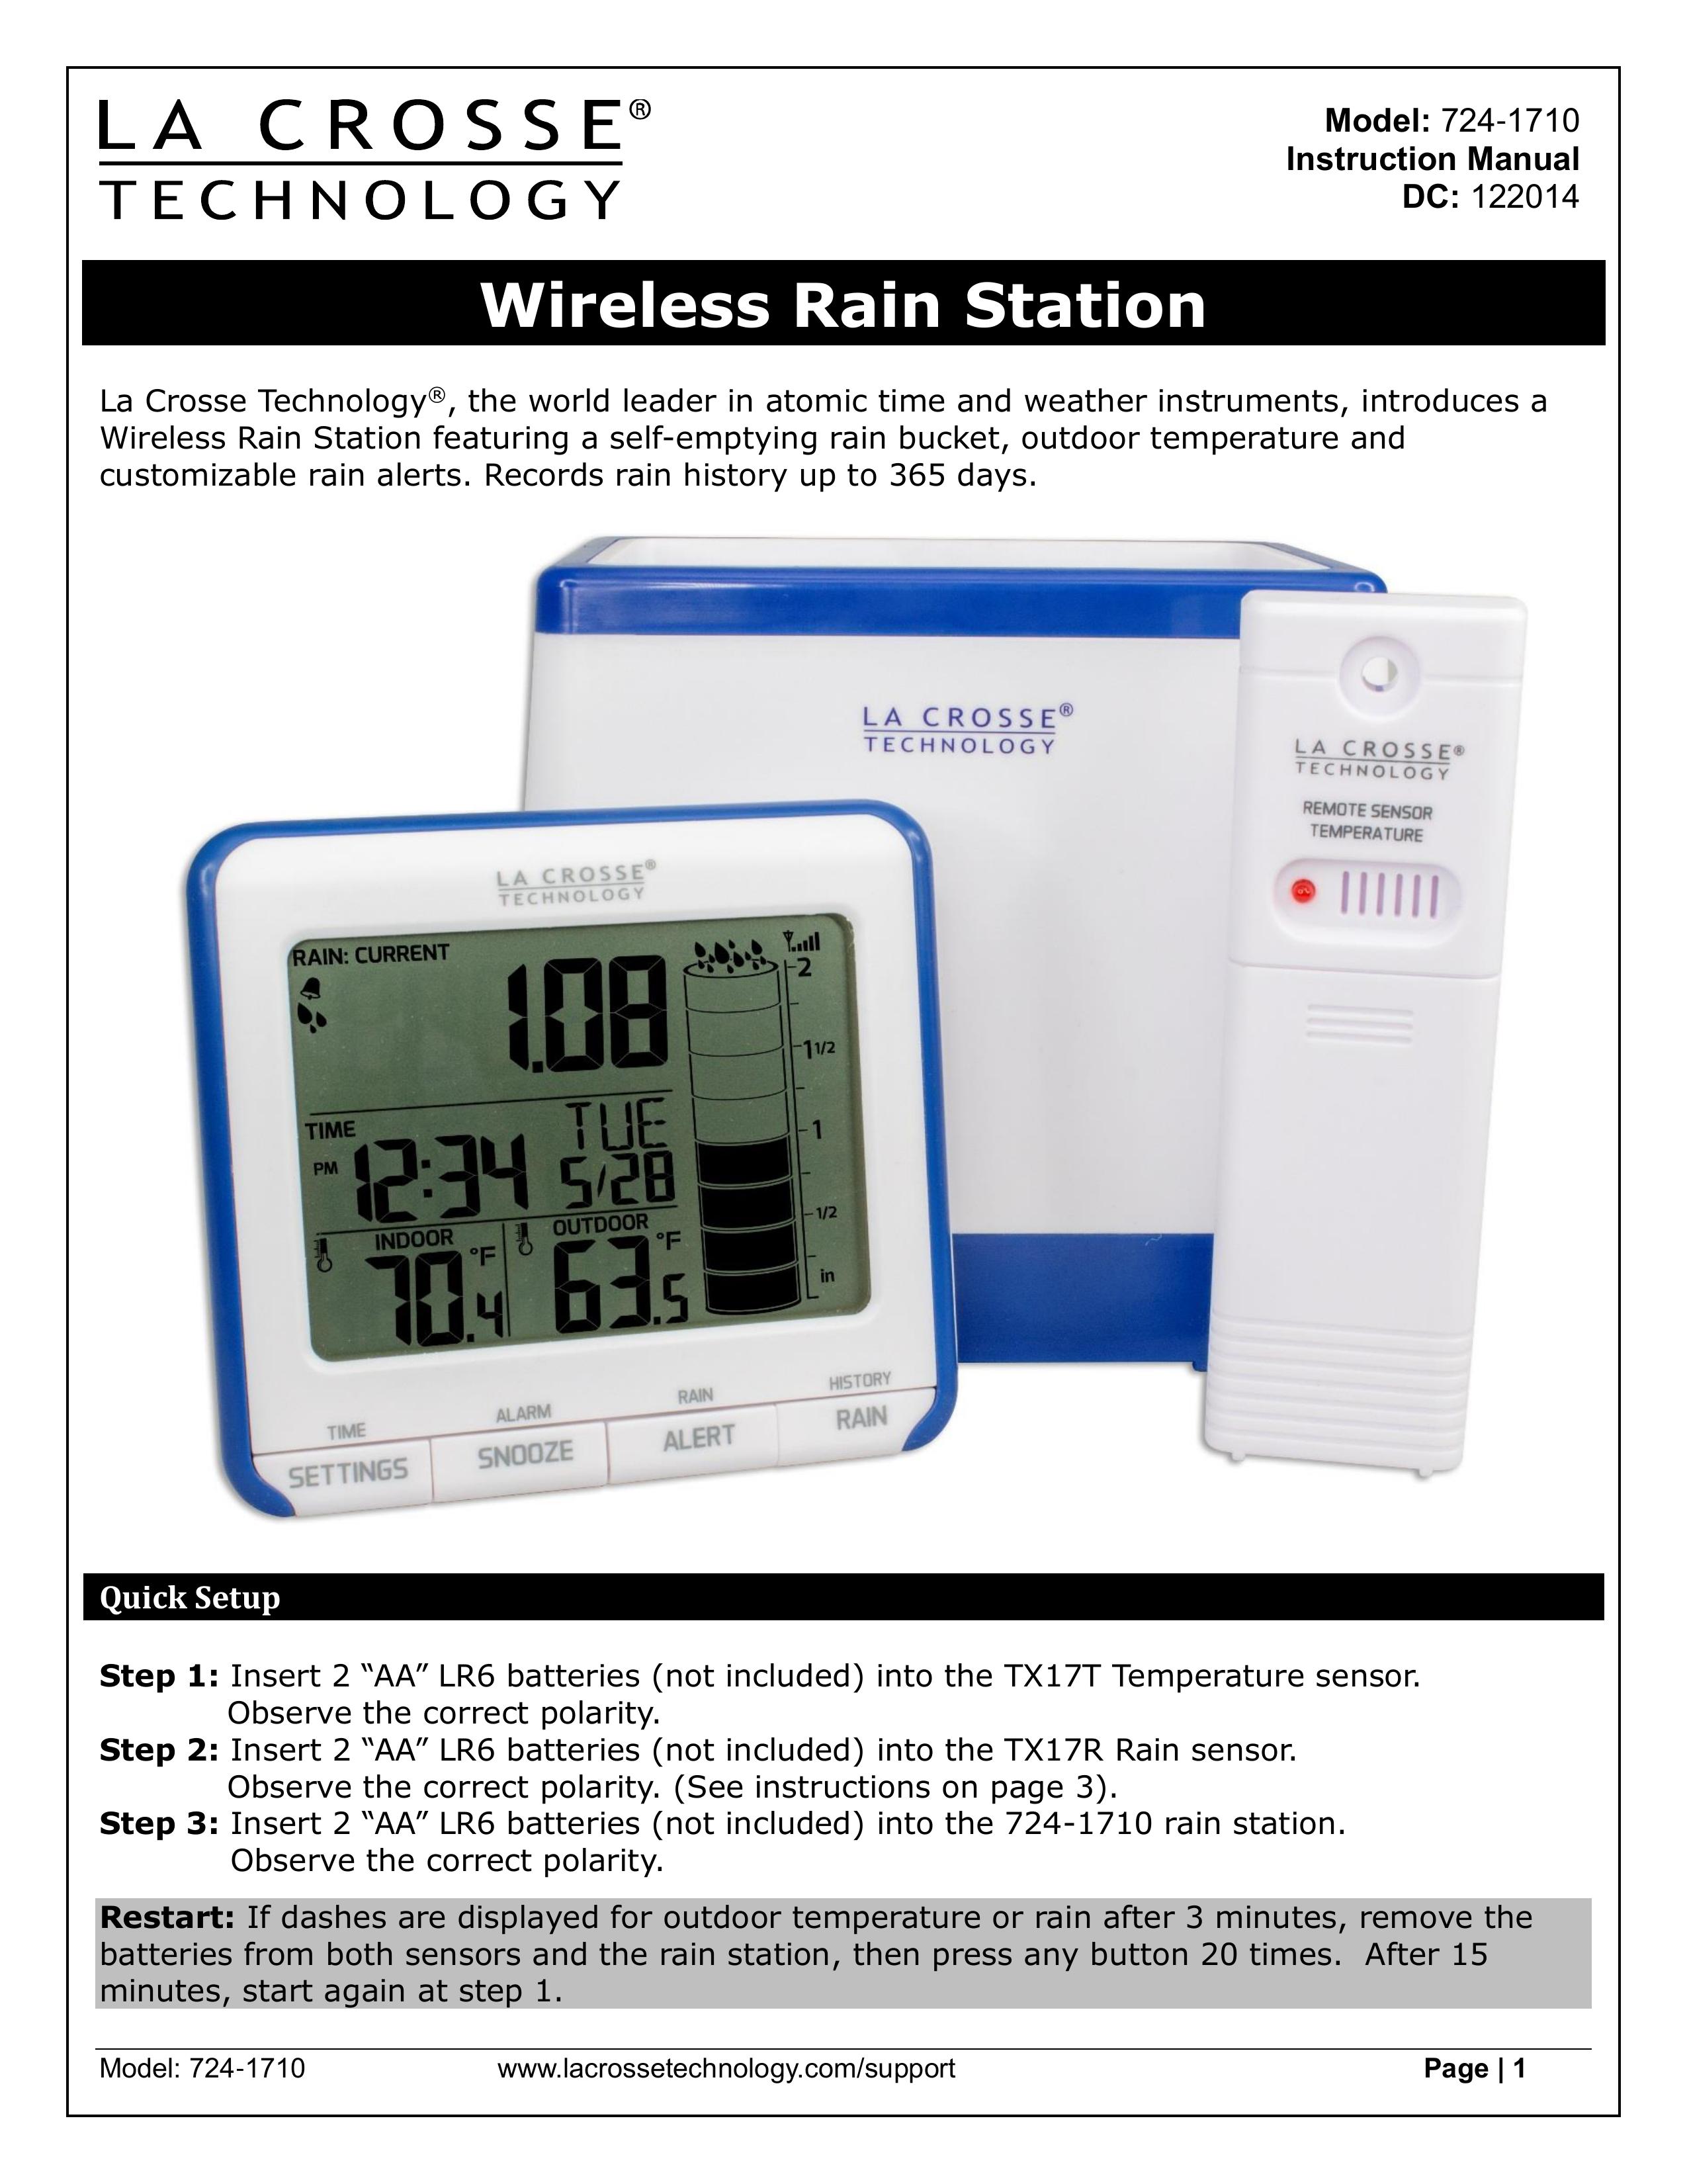 La Crosse Technology 724-1710 Weather Radio User Manual